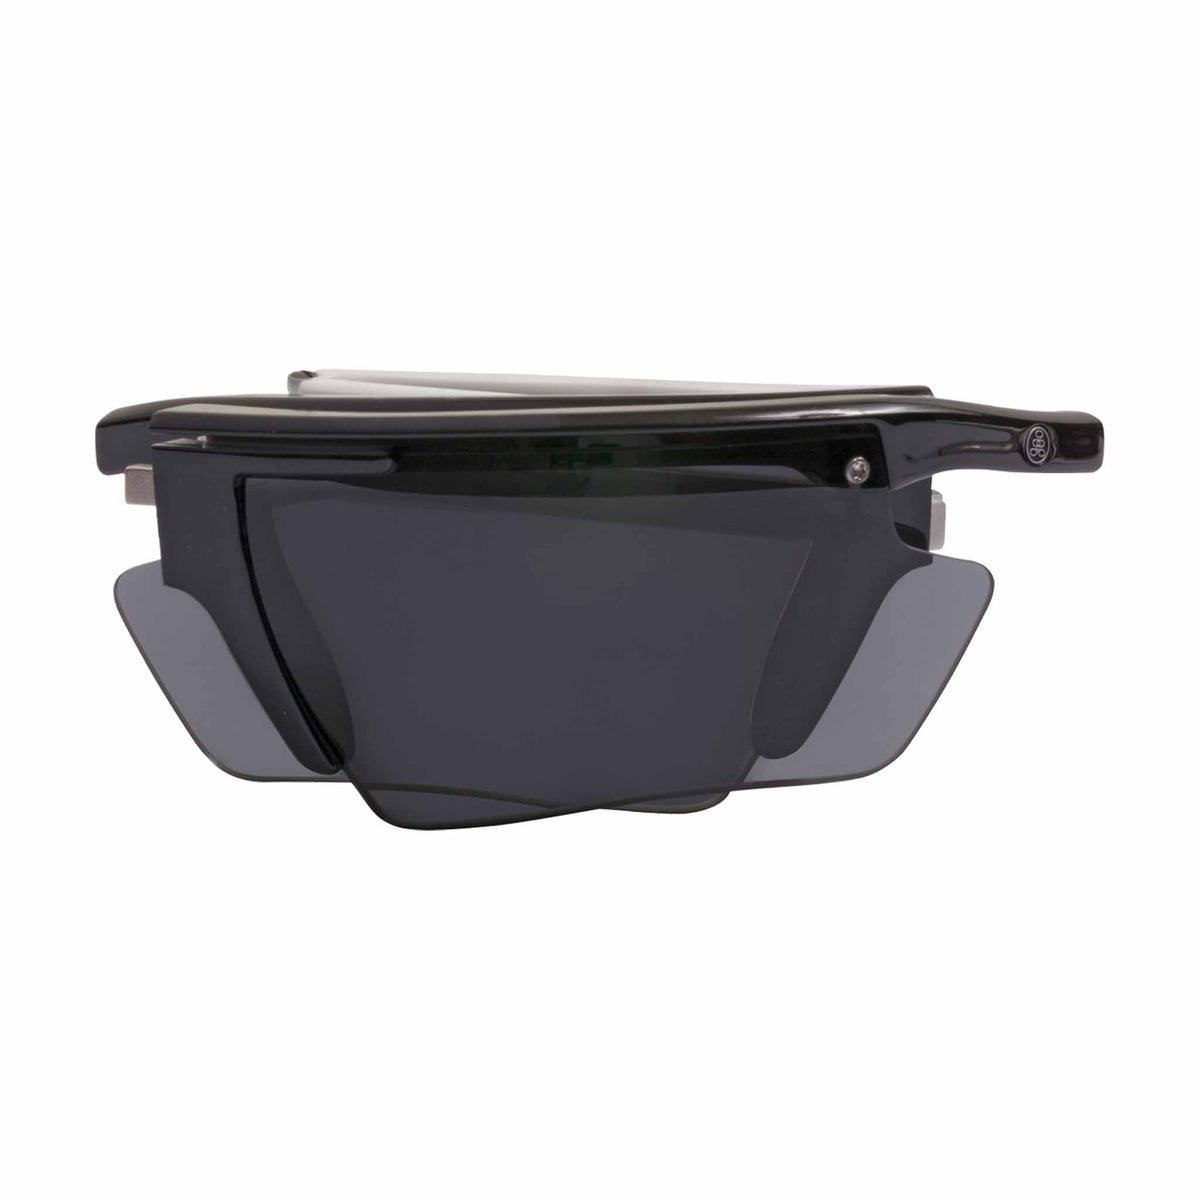 Popticals, Premium Compact Sunglasses, PopEdge, 010091-WGGP, Polarized Sunglasses, Gloss Black and White Frame, Gray Lenses, Compact View